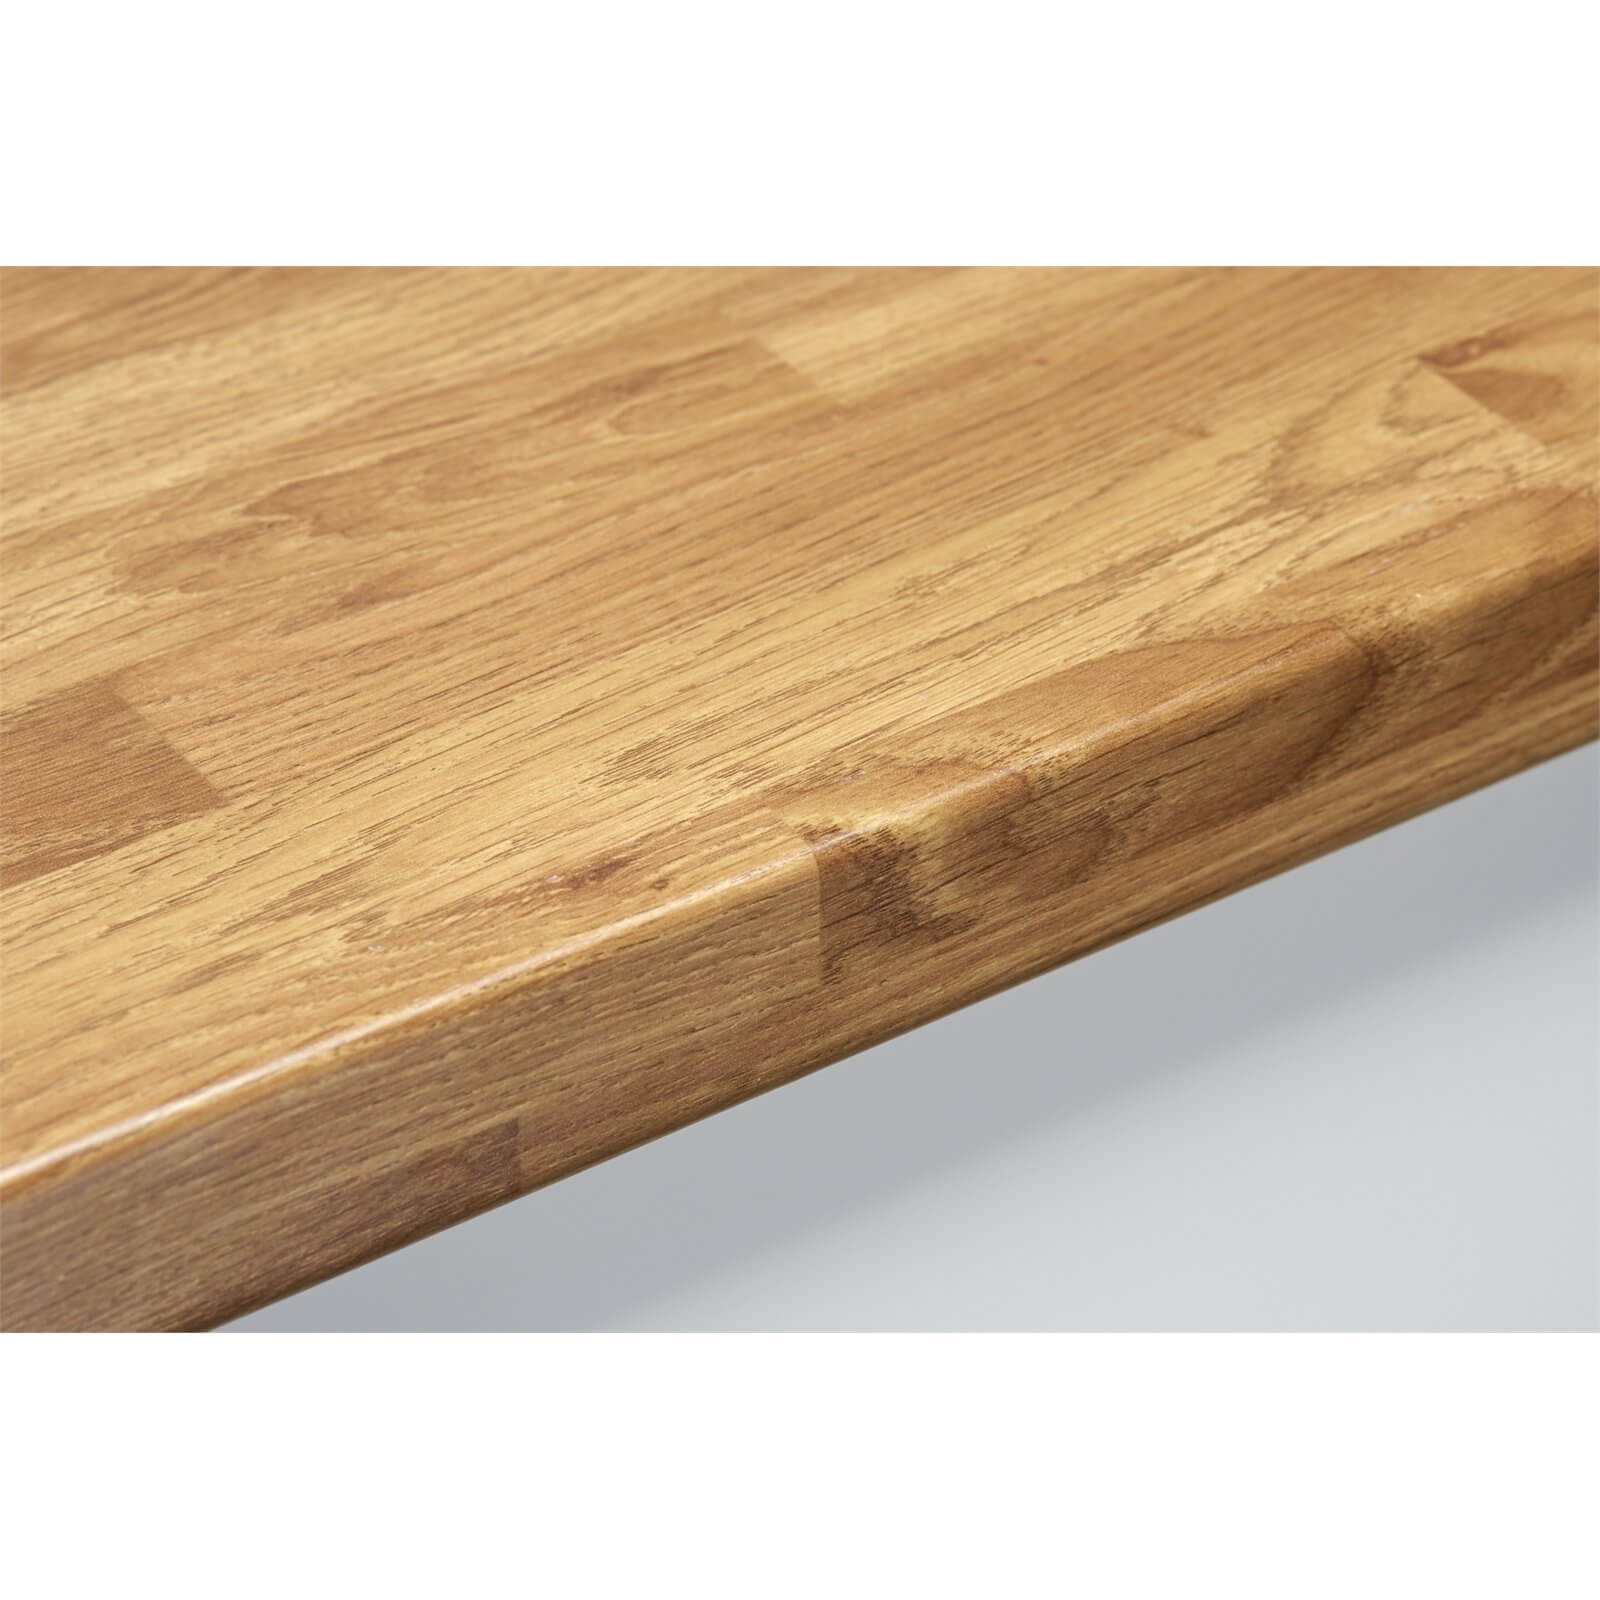 Golden Oak Breakfast Bar - Profile Edge - 200 x 90 x 3.8cm